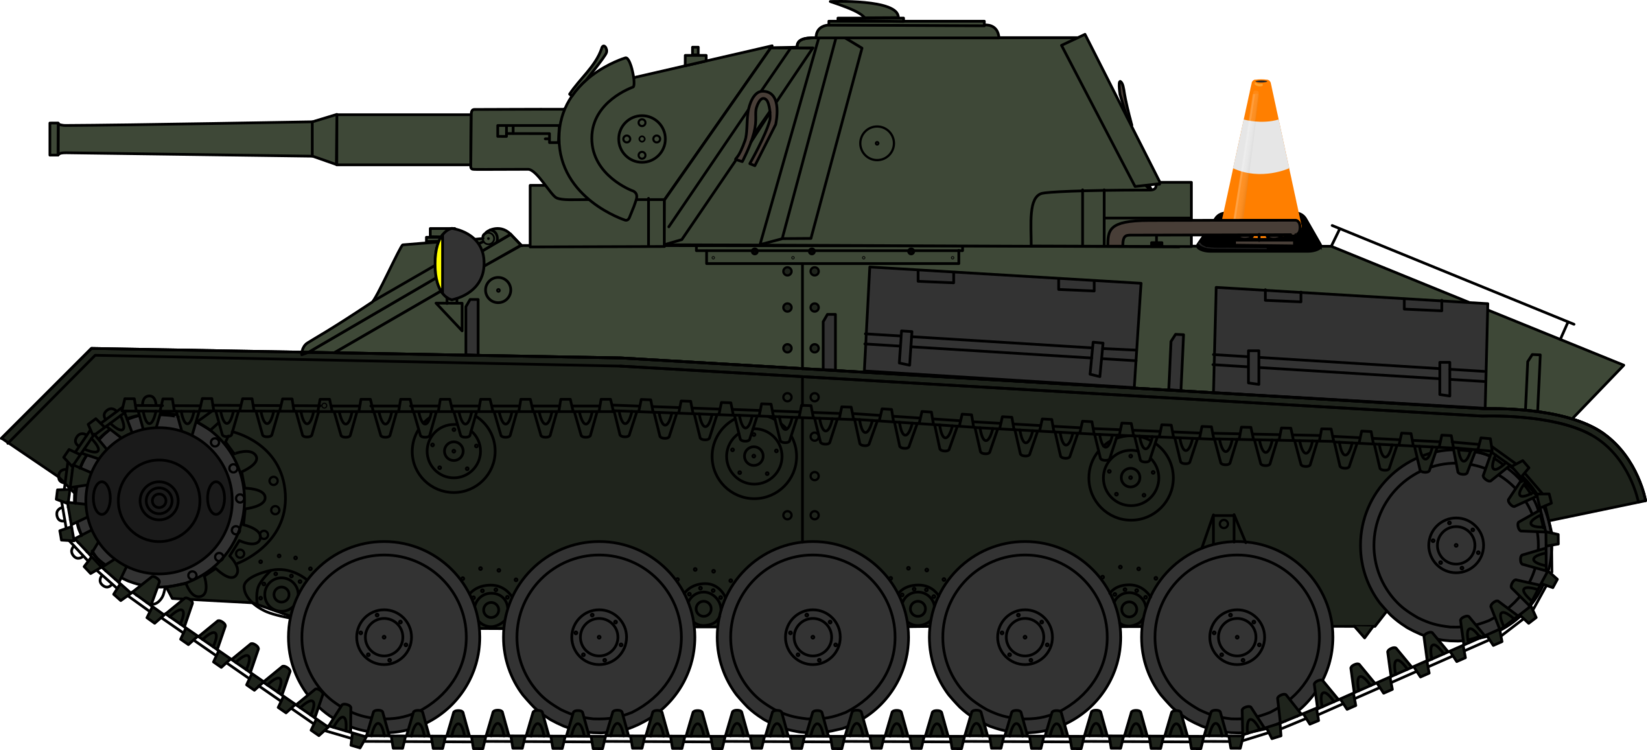 Tank,Churchill Tank,Weapon